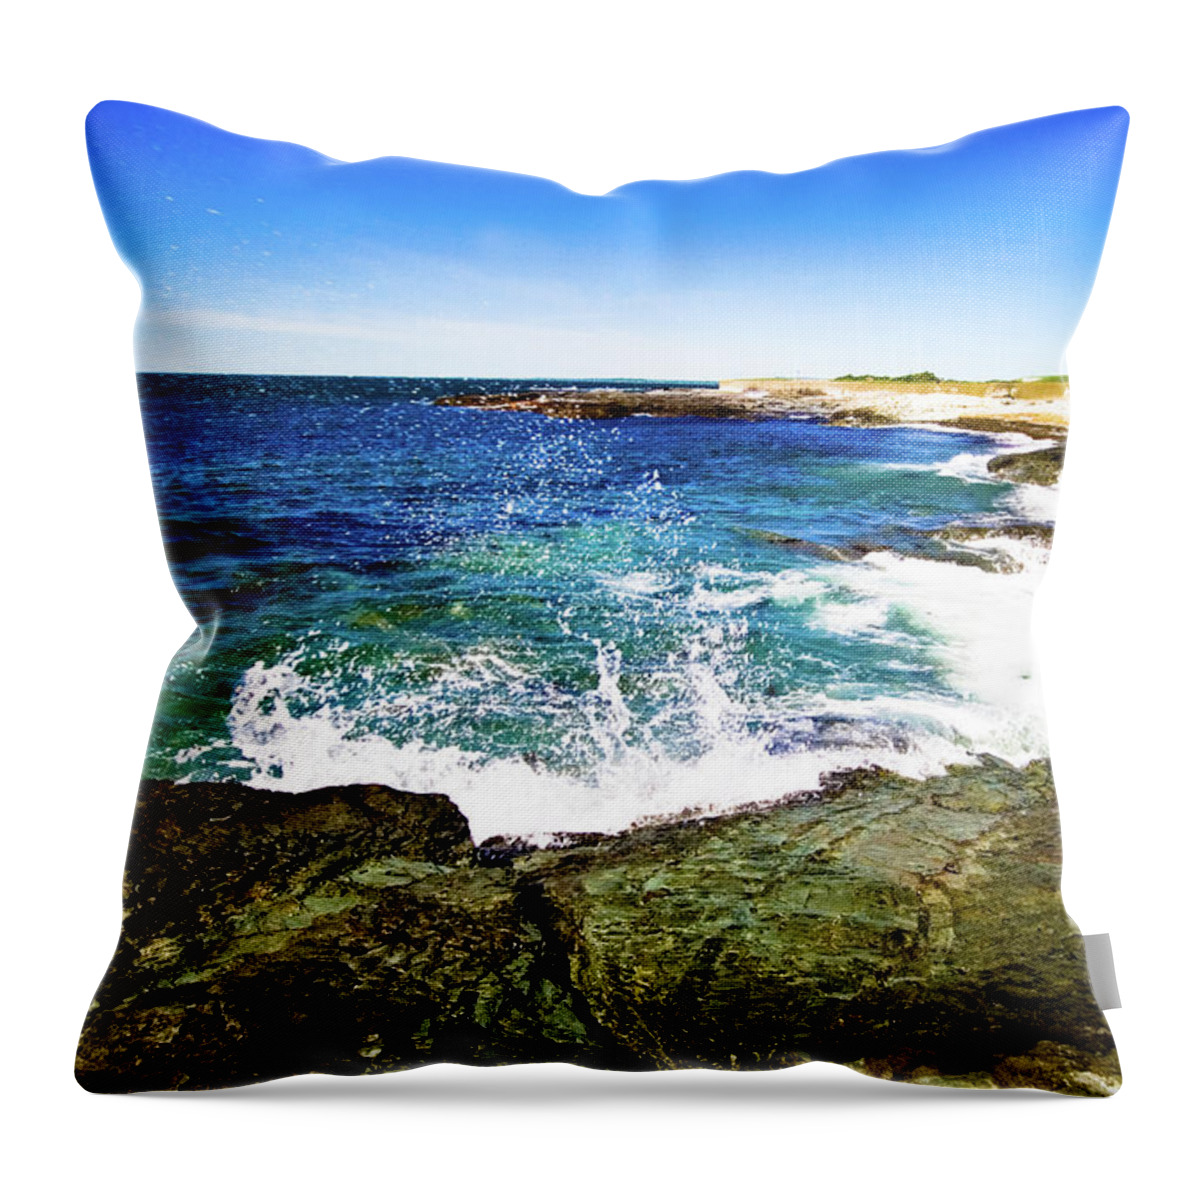 Photograph Throw Pillow featuring the photograph Ocean Drive by Susan Schumann